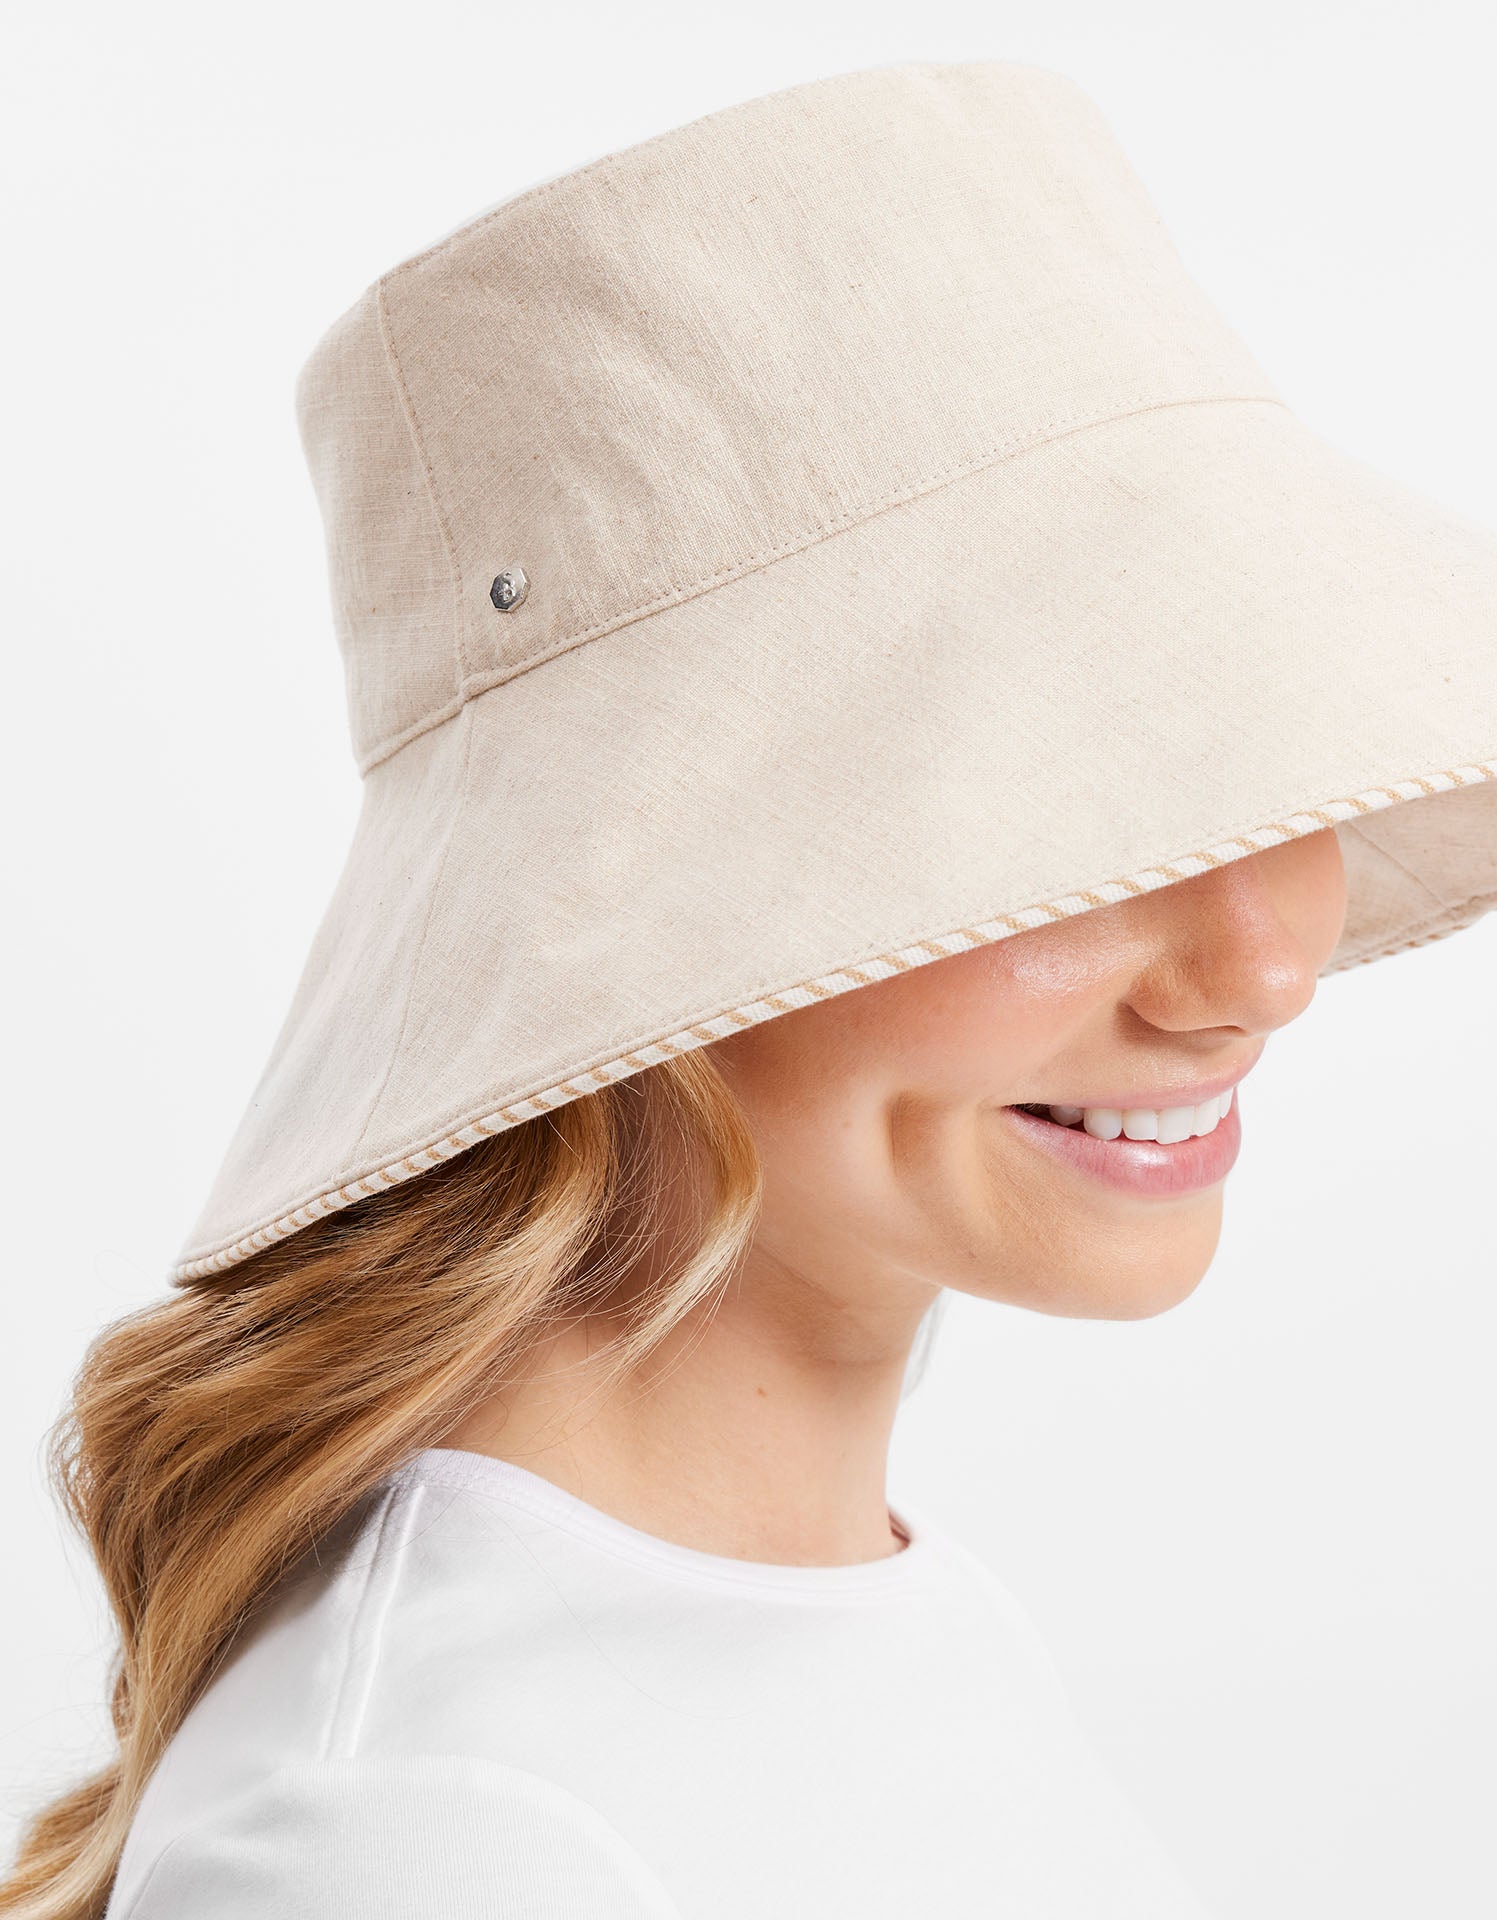 Storey - Solbari - Everyday Sun Hat UPF 50+ Packable, lightweight